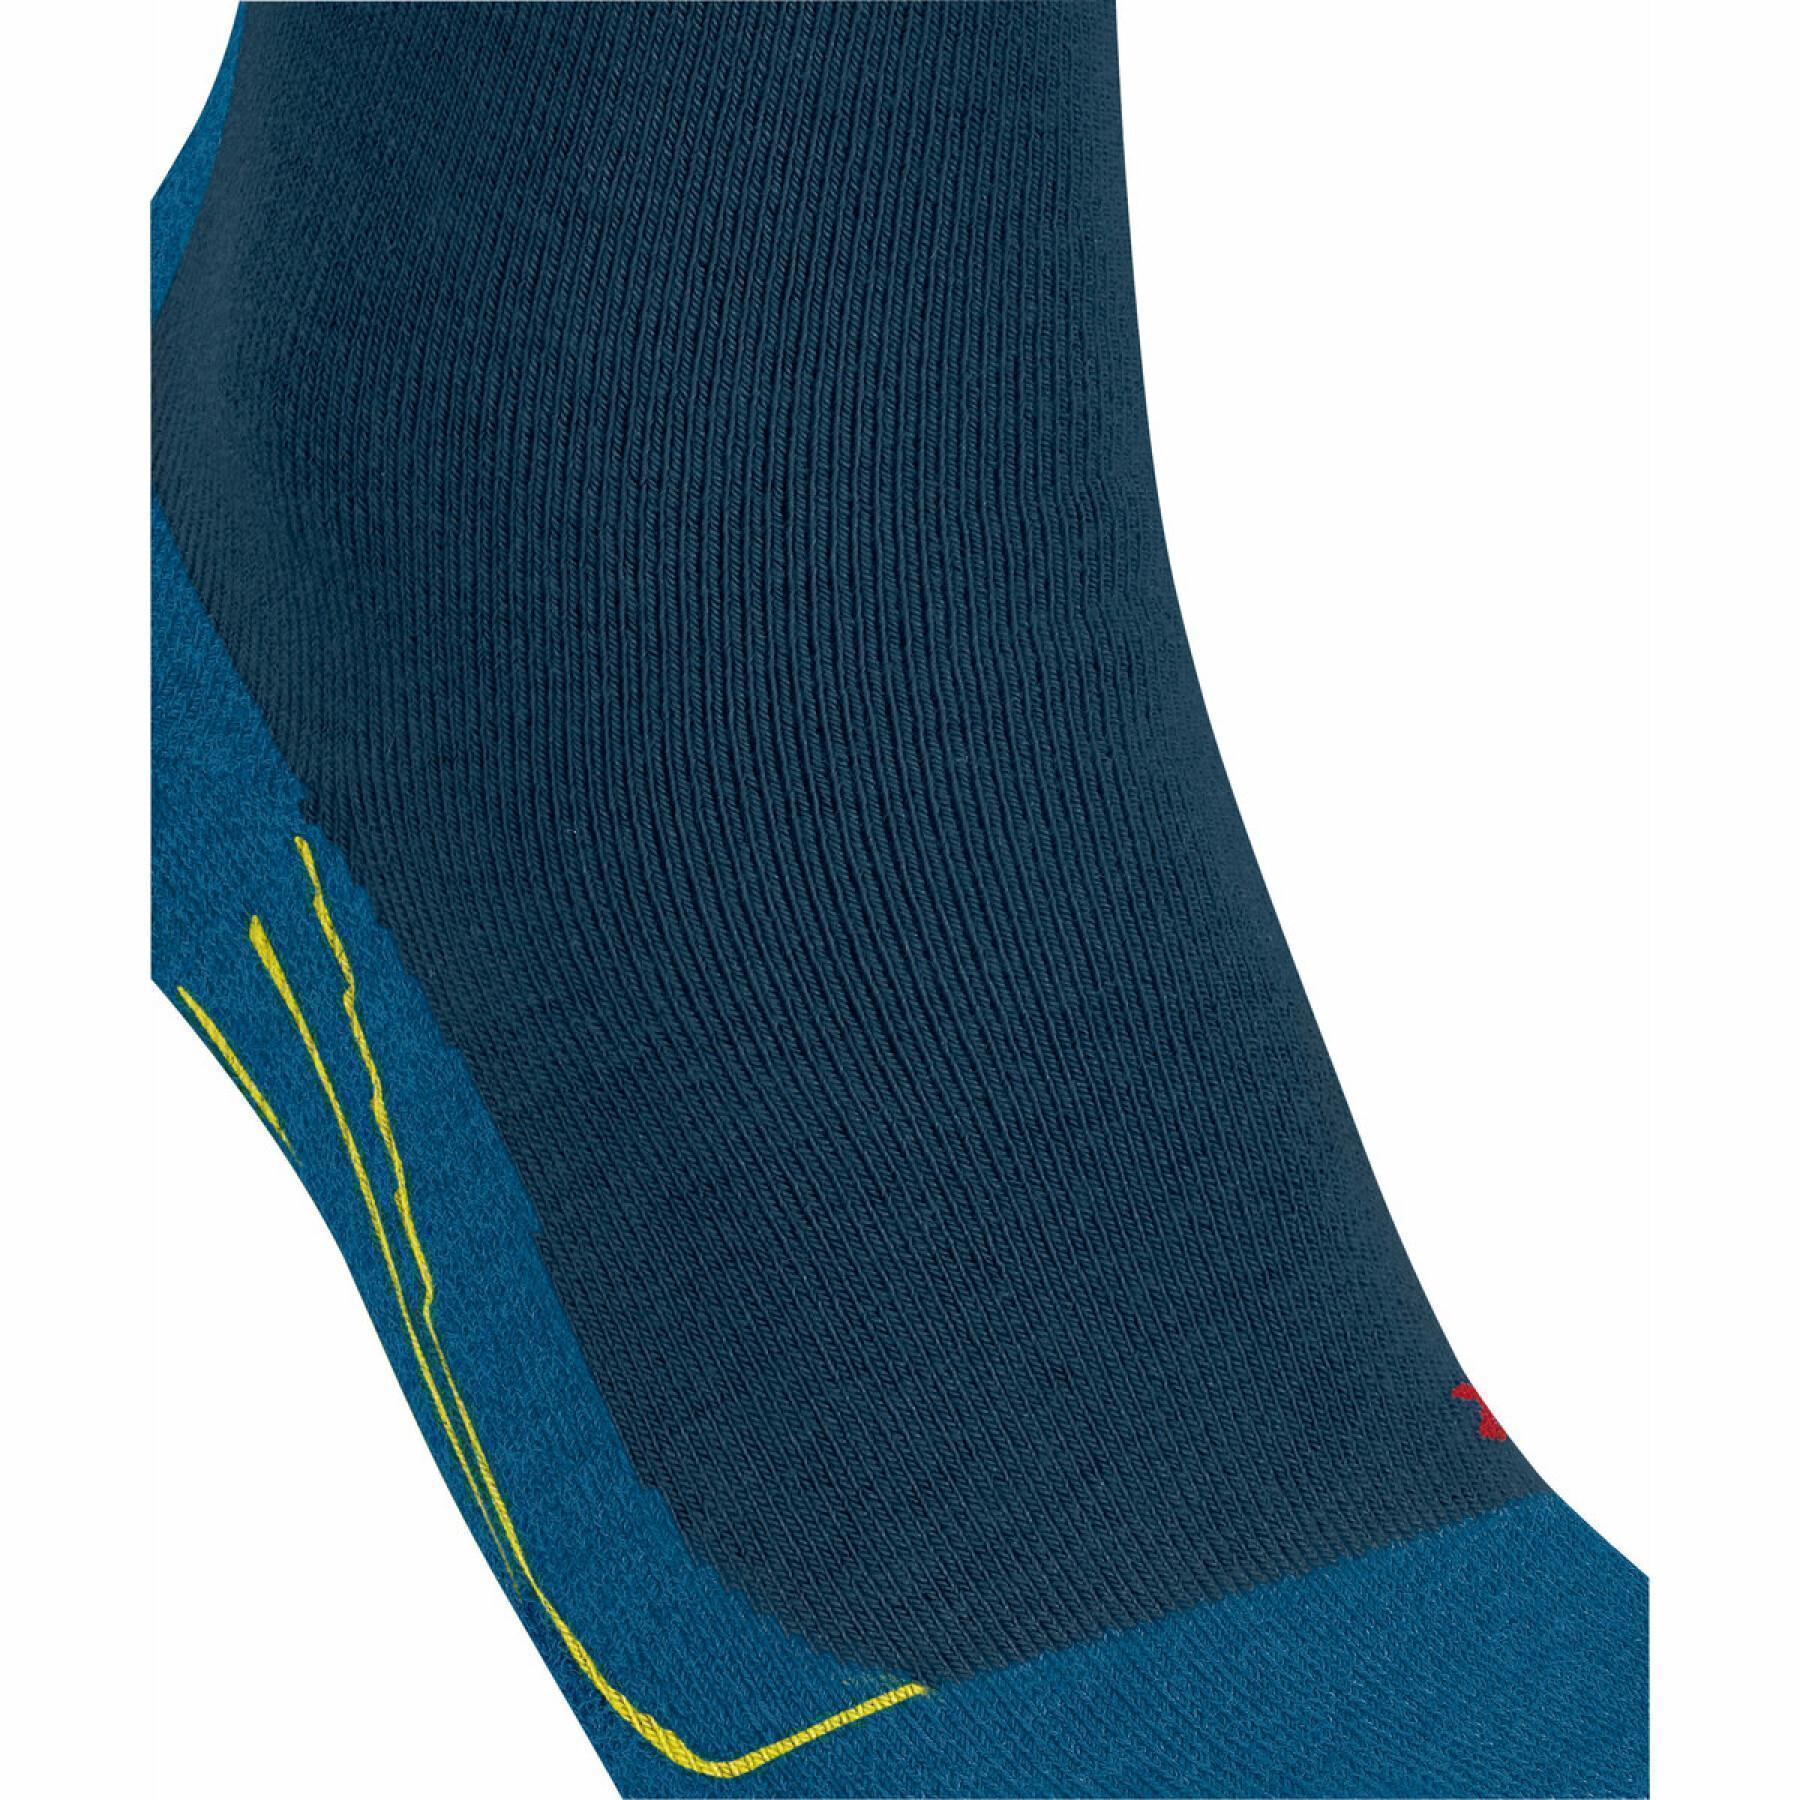 Falke SK2 Diagonal High Socks